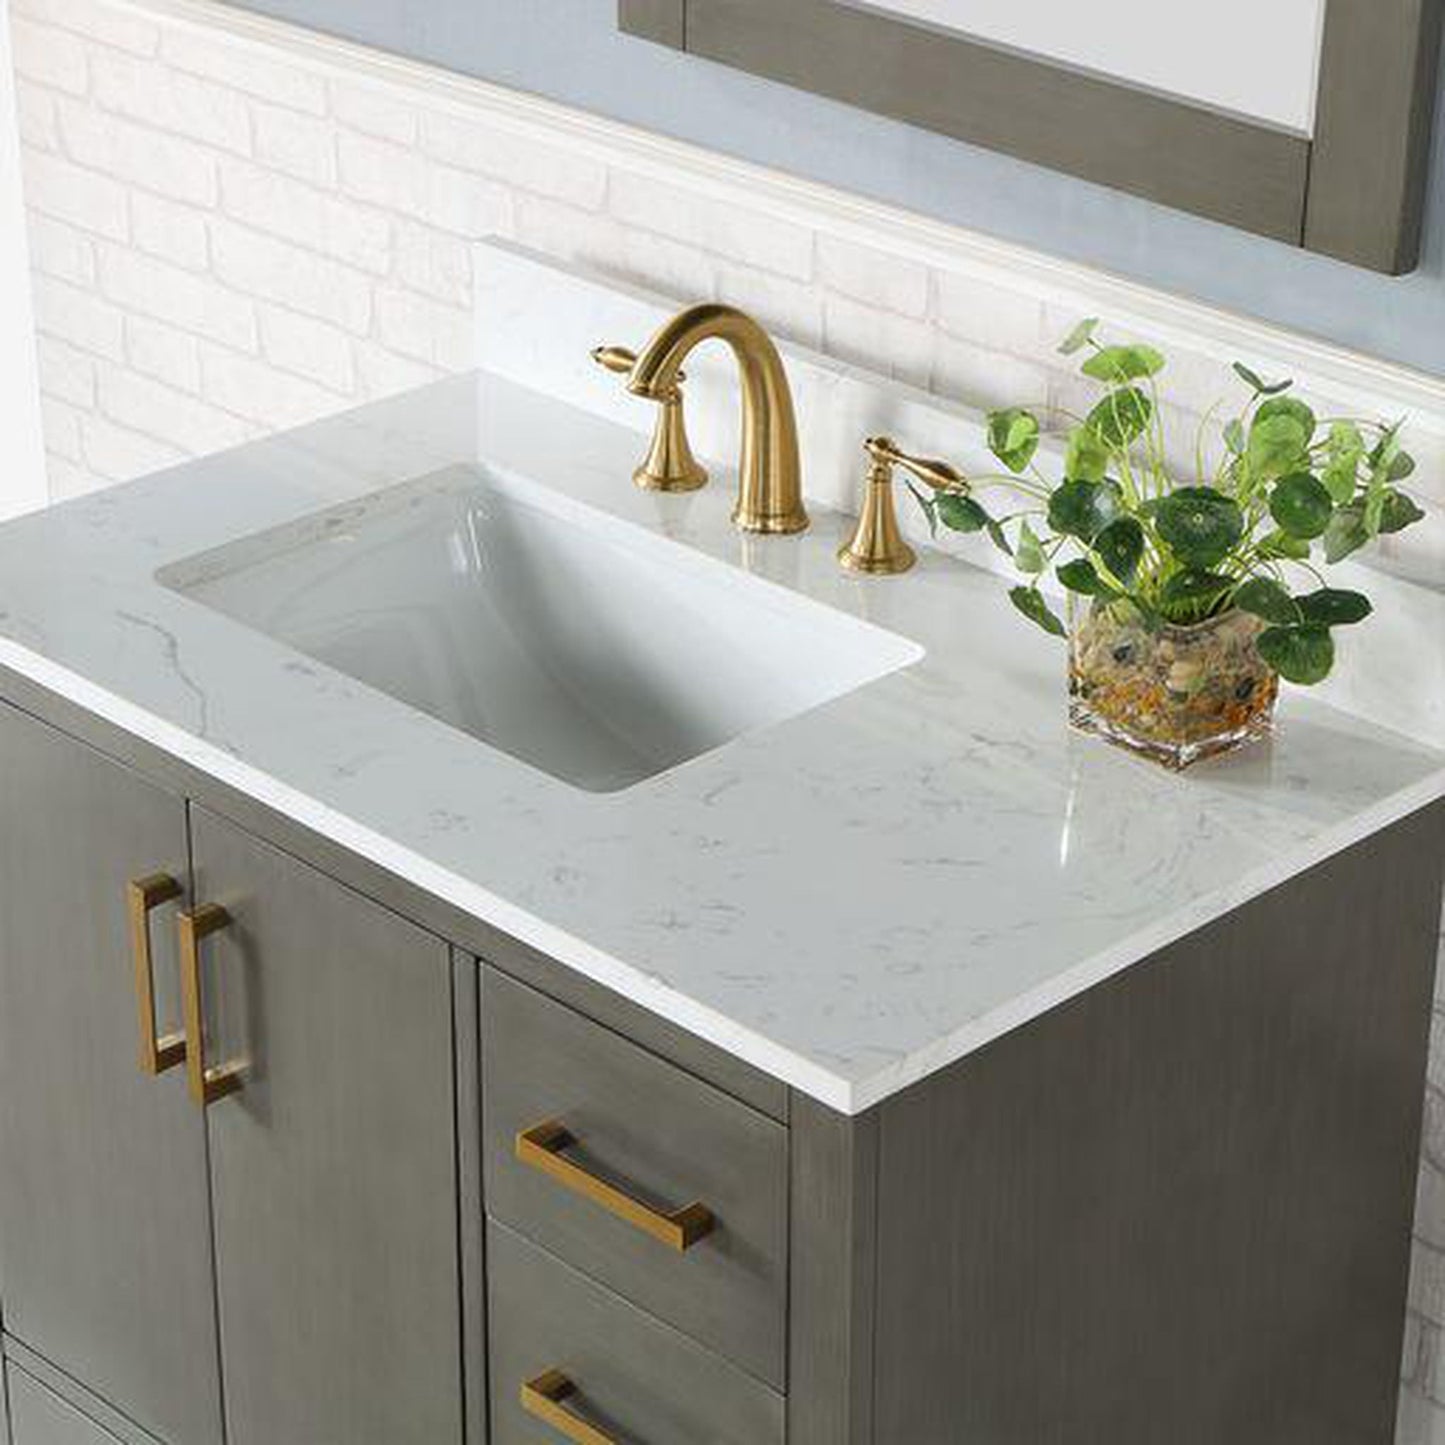 Altair Monna 36" Gray Pine Freestanding Single Bathroom Vanity Set With Mirror, Aosta White Composite Stone Top, Rectangular Undermount Ceramic Sink, Overflow, and Backsplash